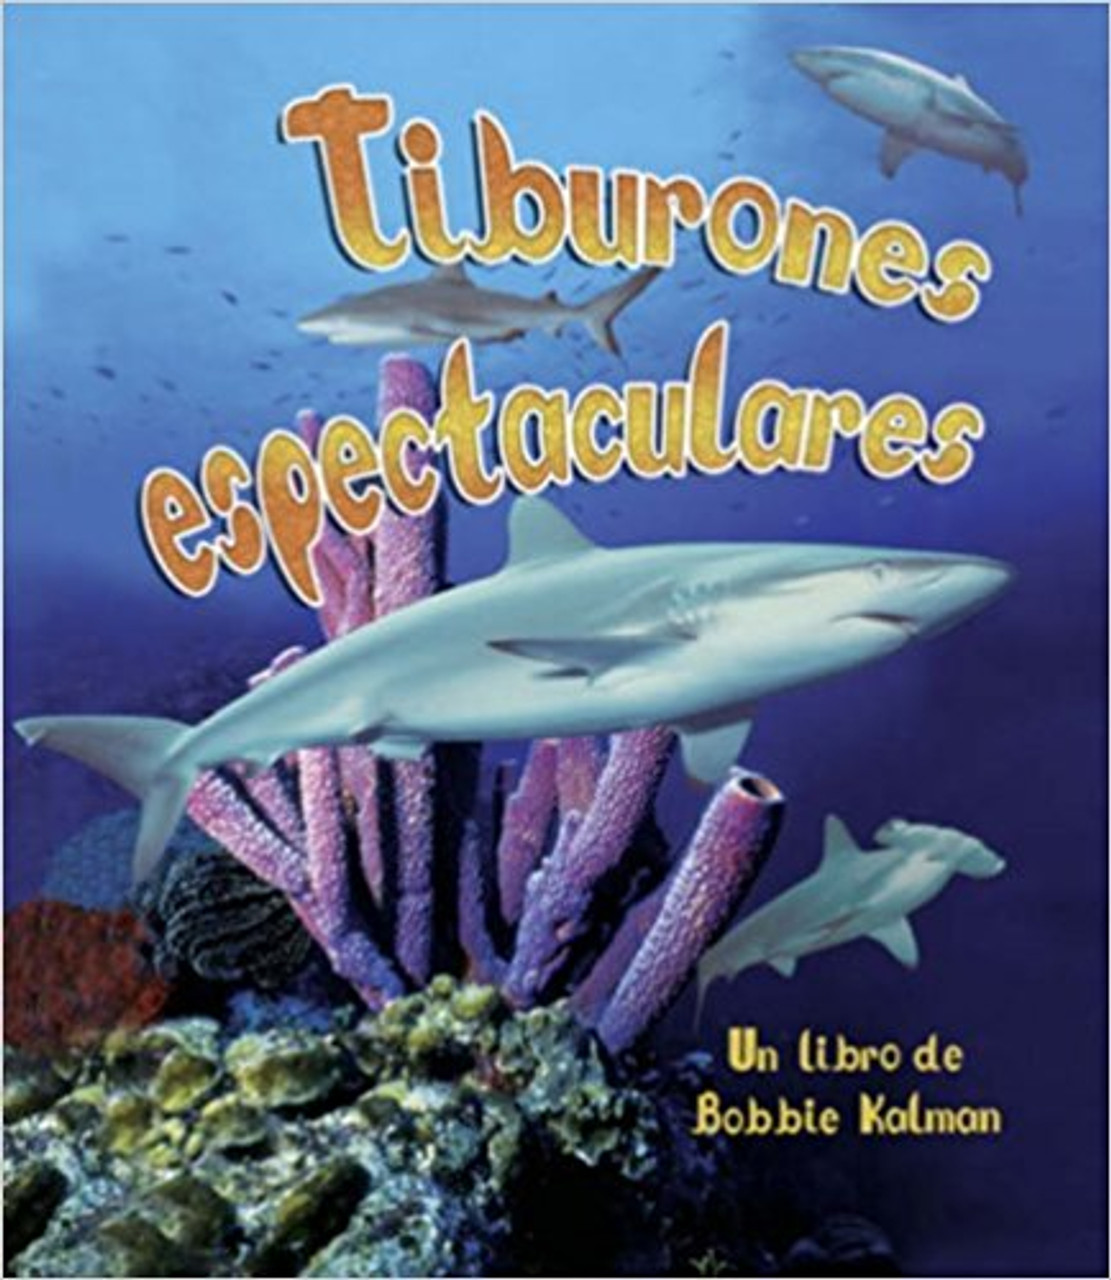 Tiburones Espectaculares by Bobbie Kalman